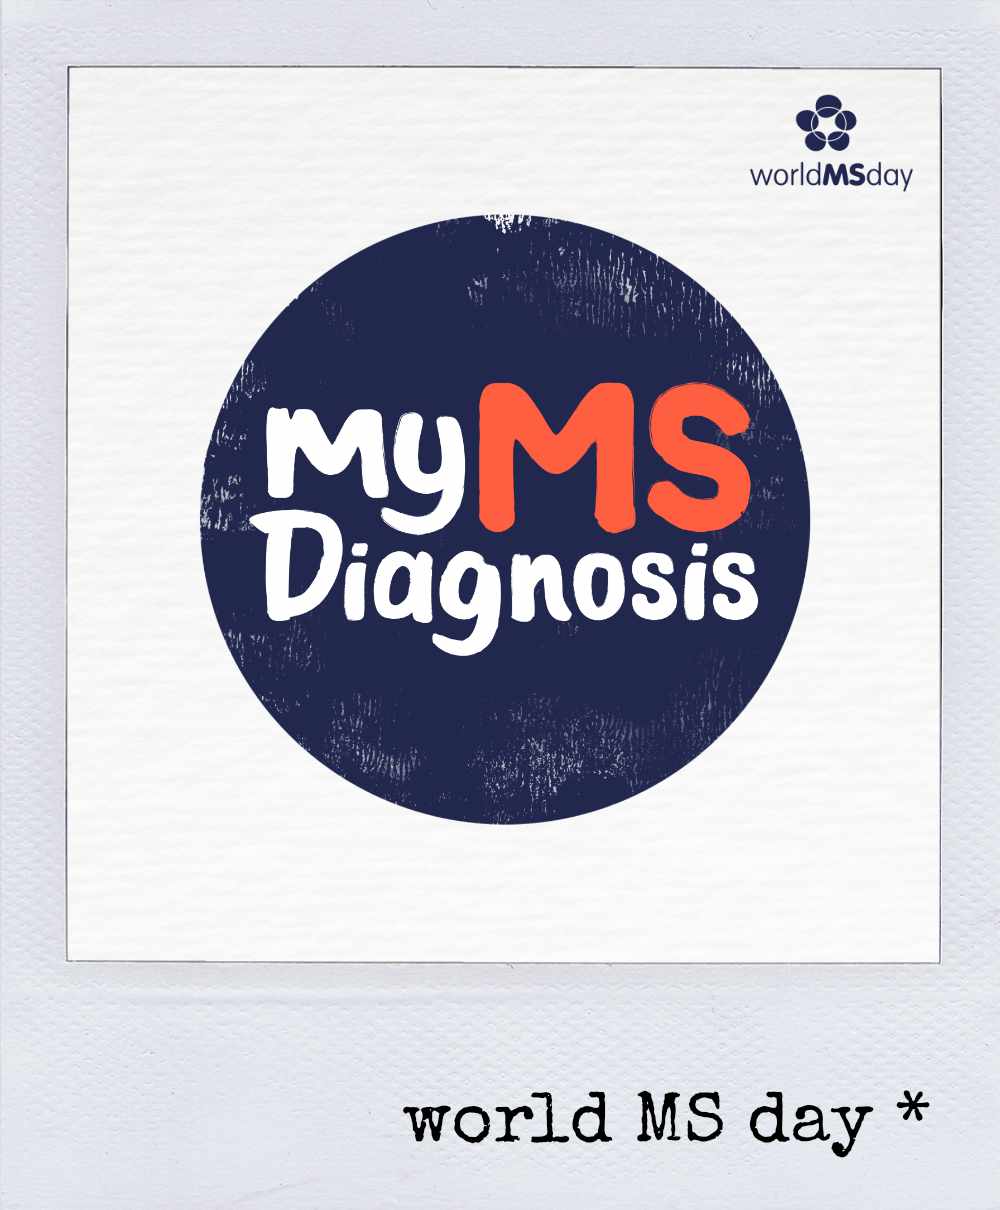 worldMSday #mymsdiagnosis